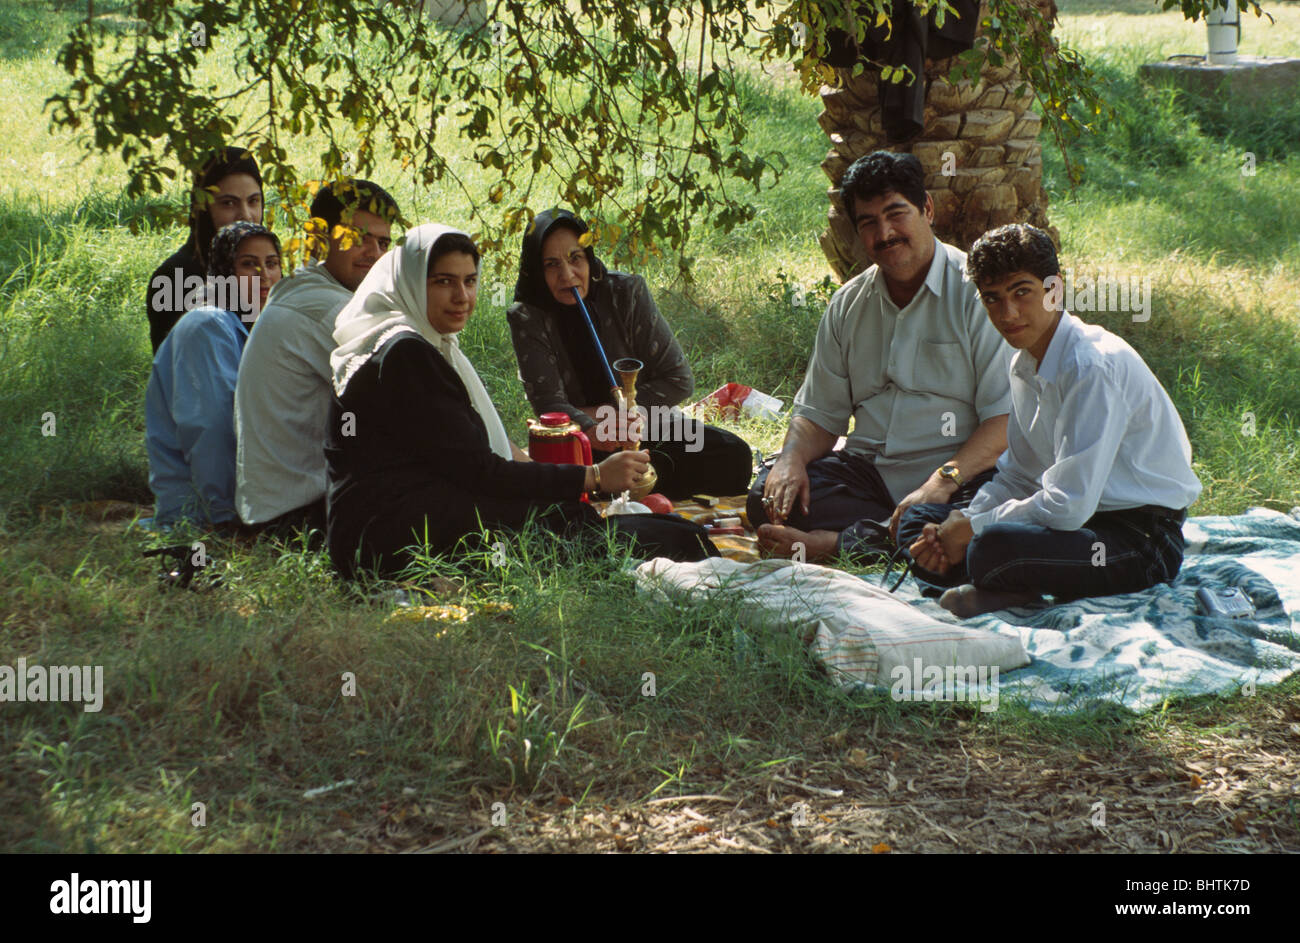 Iranian people having a picnic in the park, Tehran, Iran Stock Photo